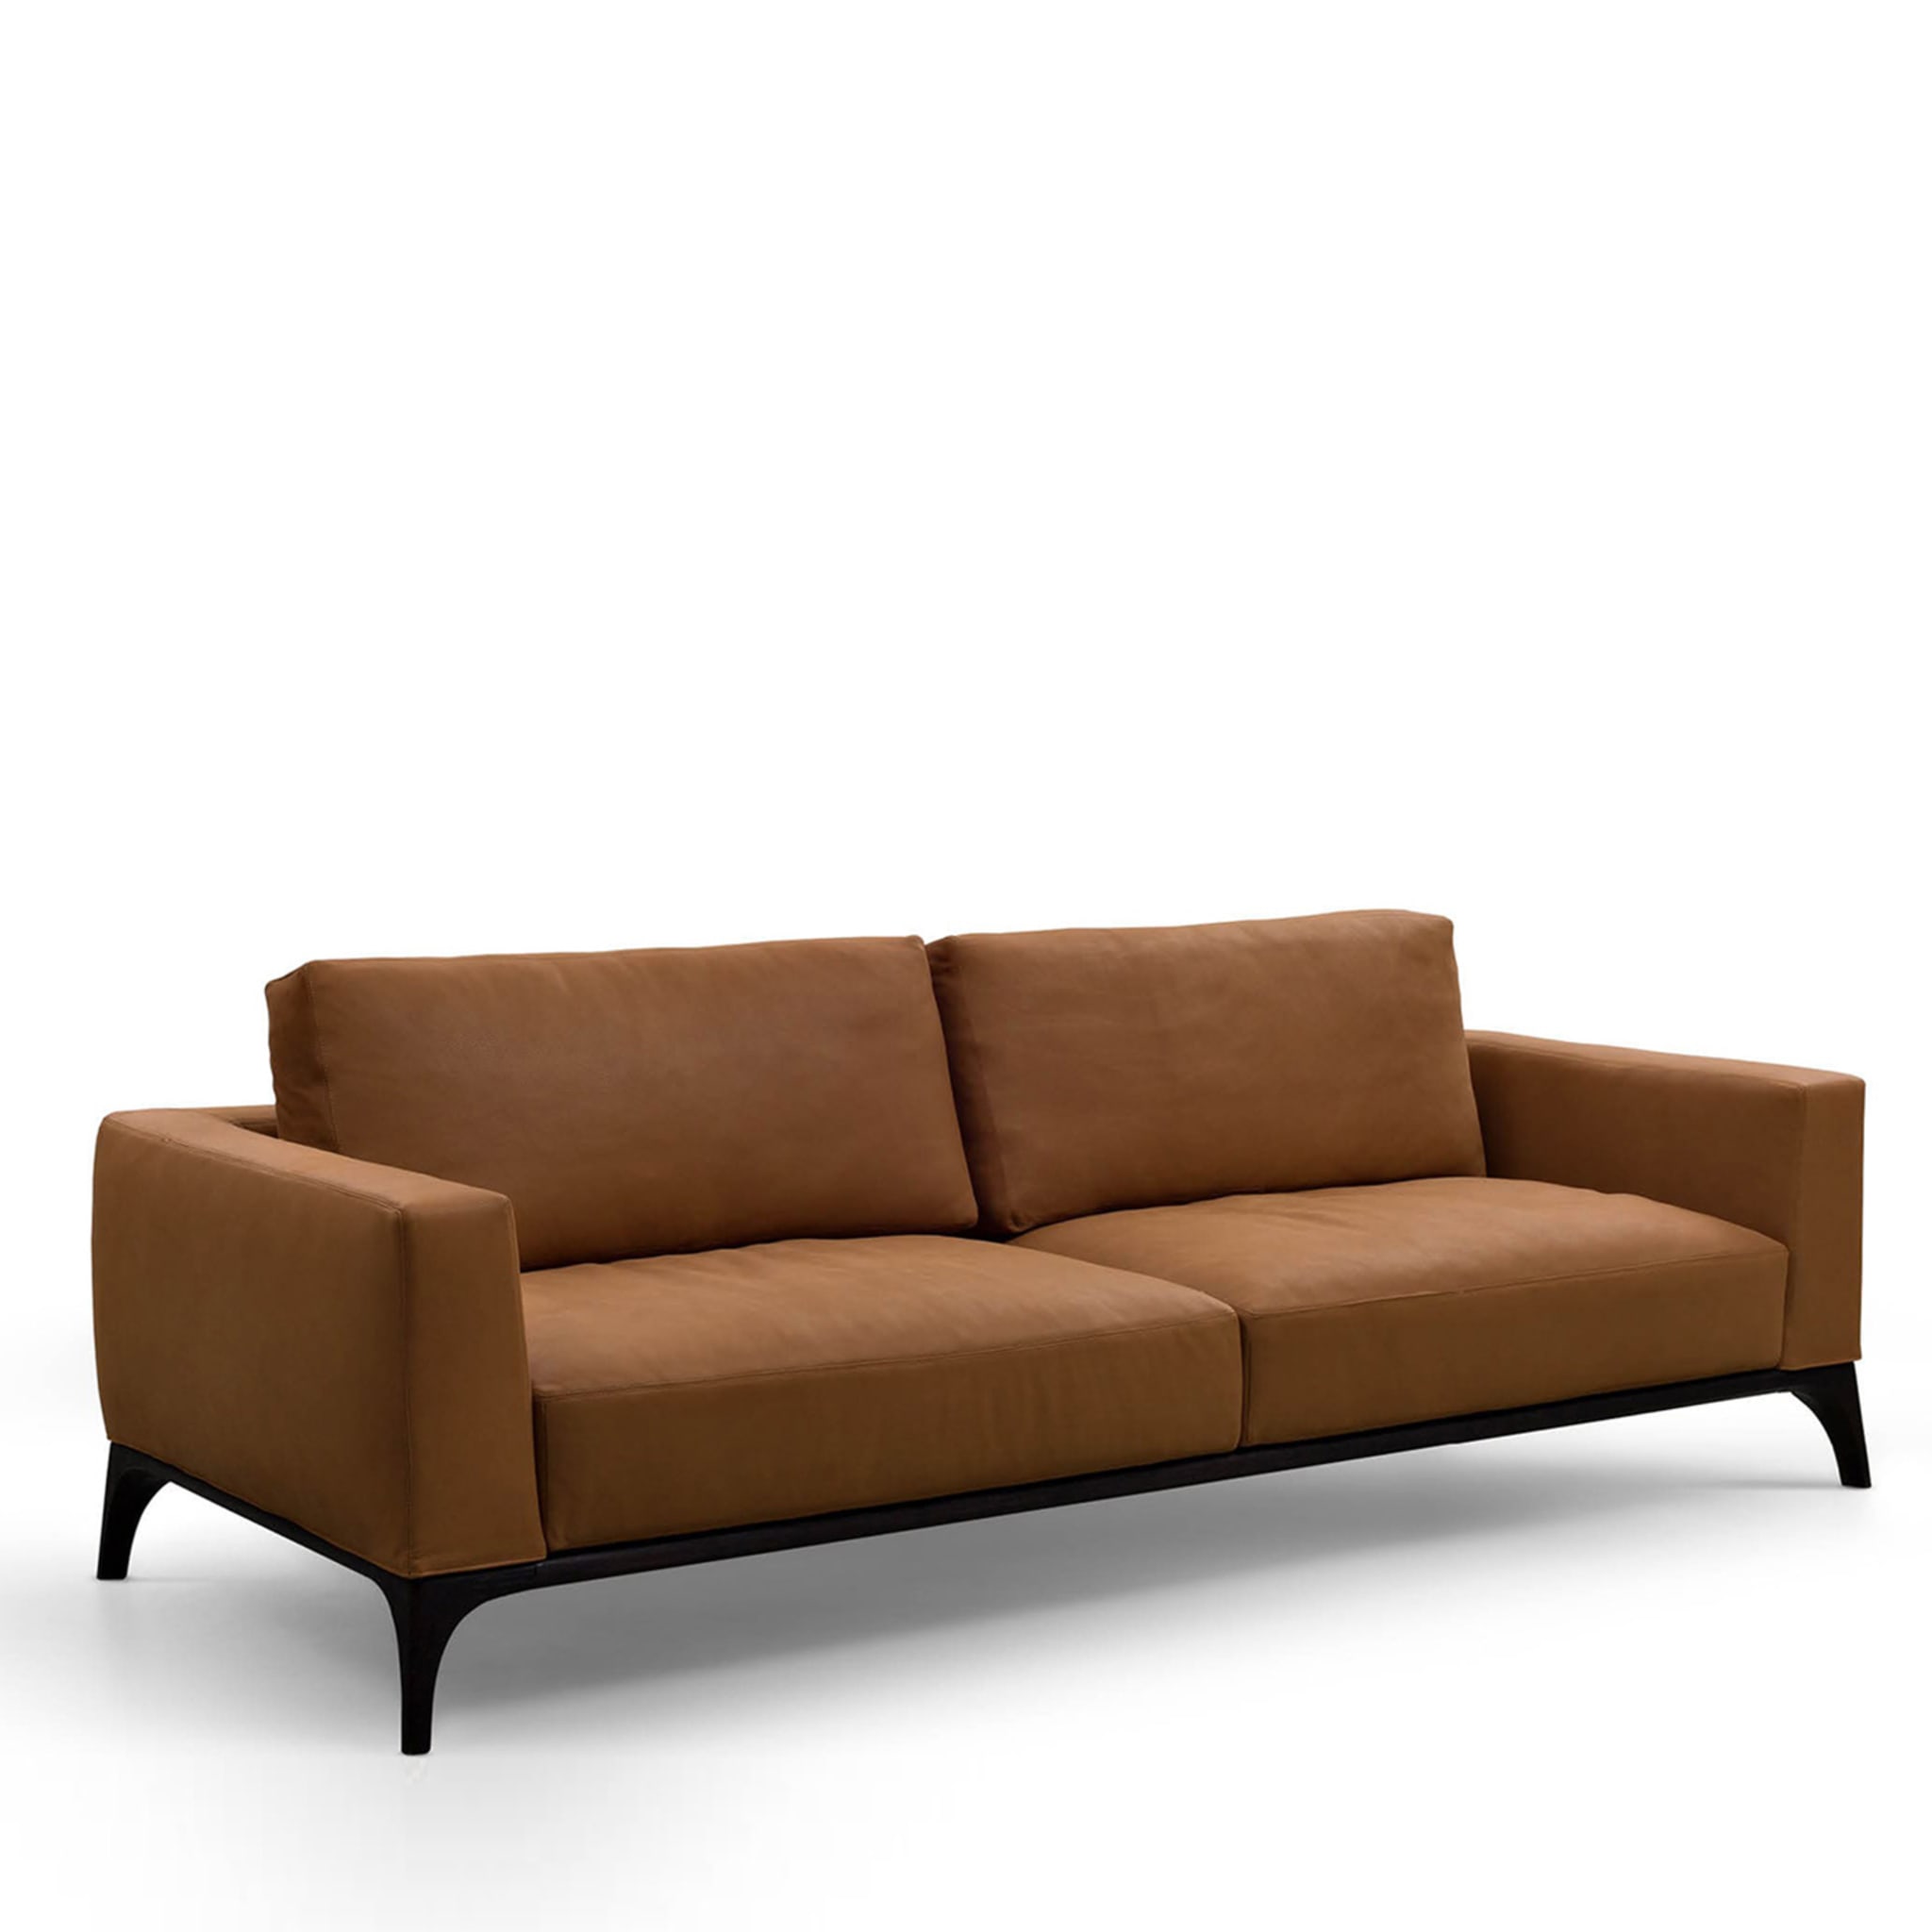 Milano Cookie-Brown Leather Sofa by Giuseppe Manzoni - Alternative view 1